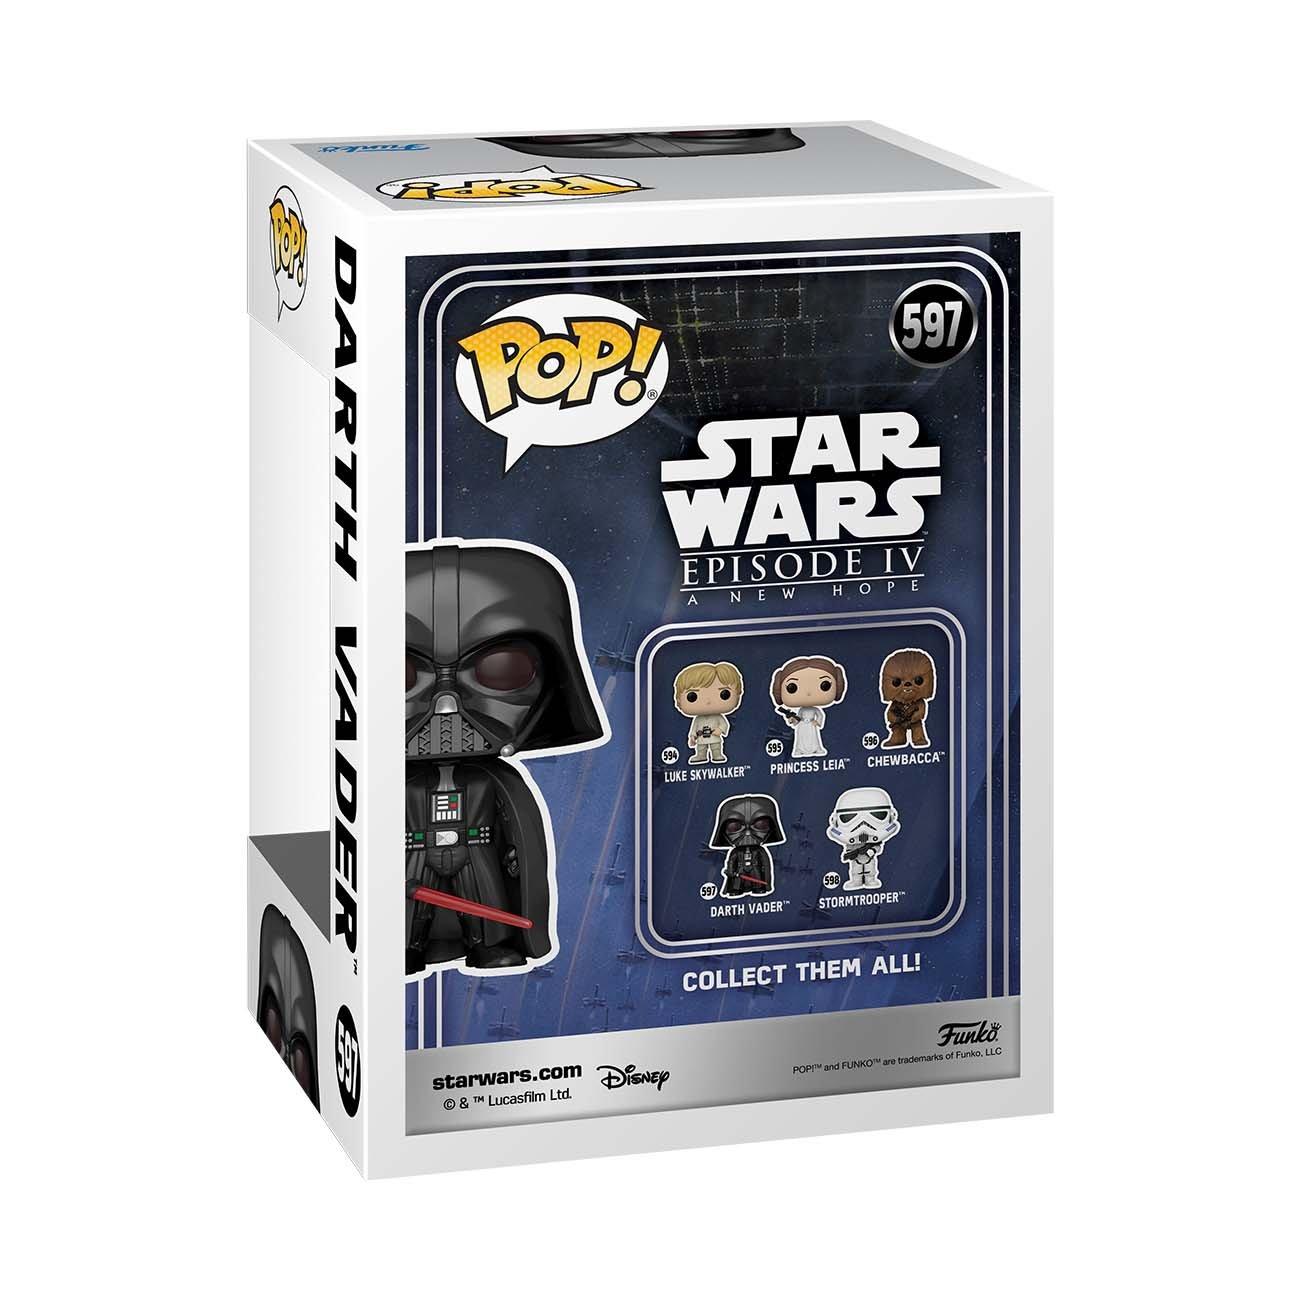 Buy Pop! Luke Skywalker - Star Wars: Episode IV A New Hope at Funko.